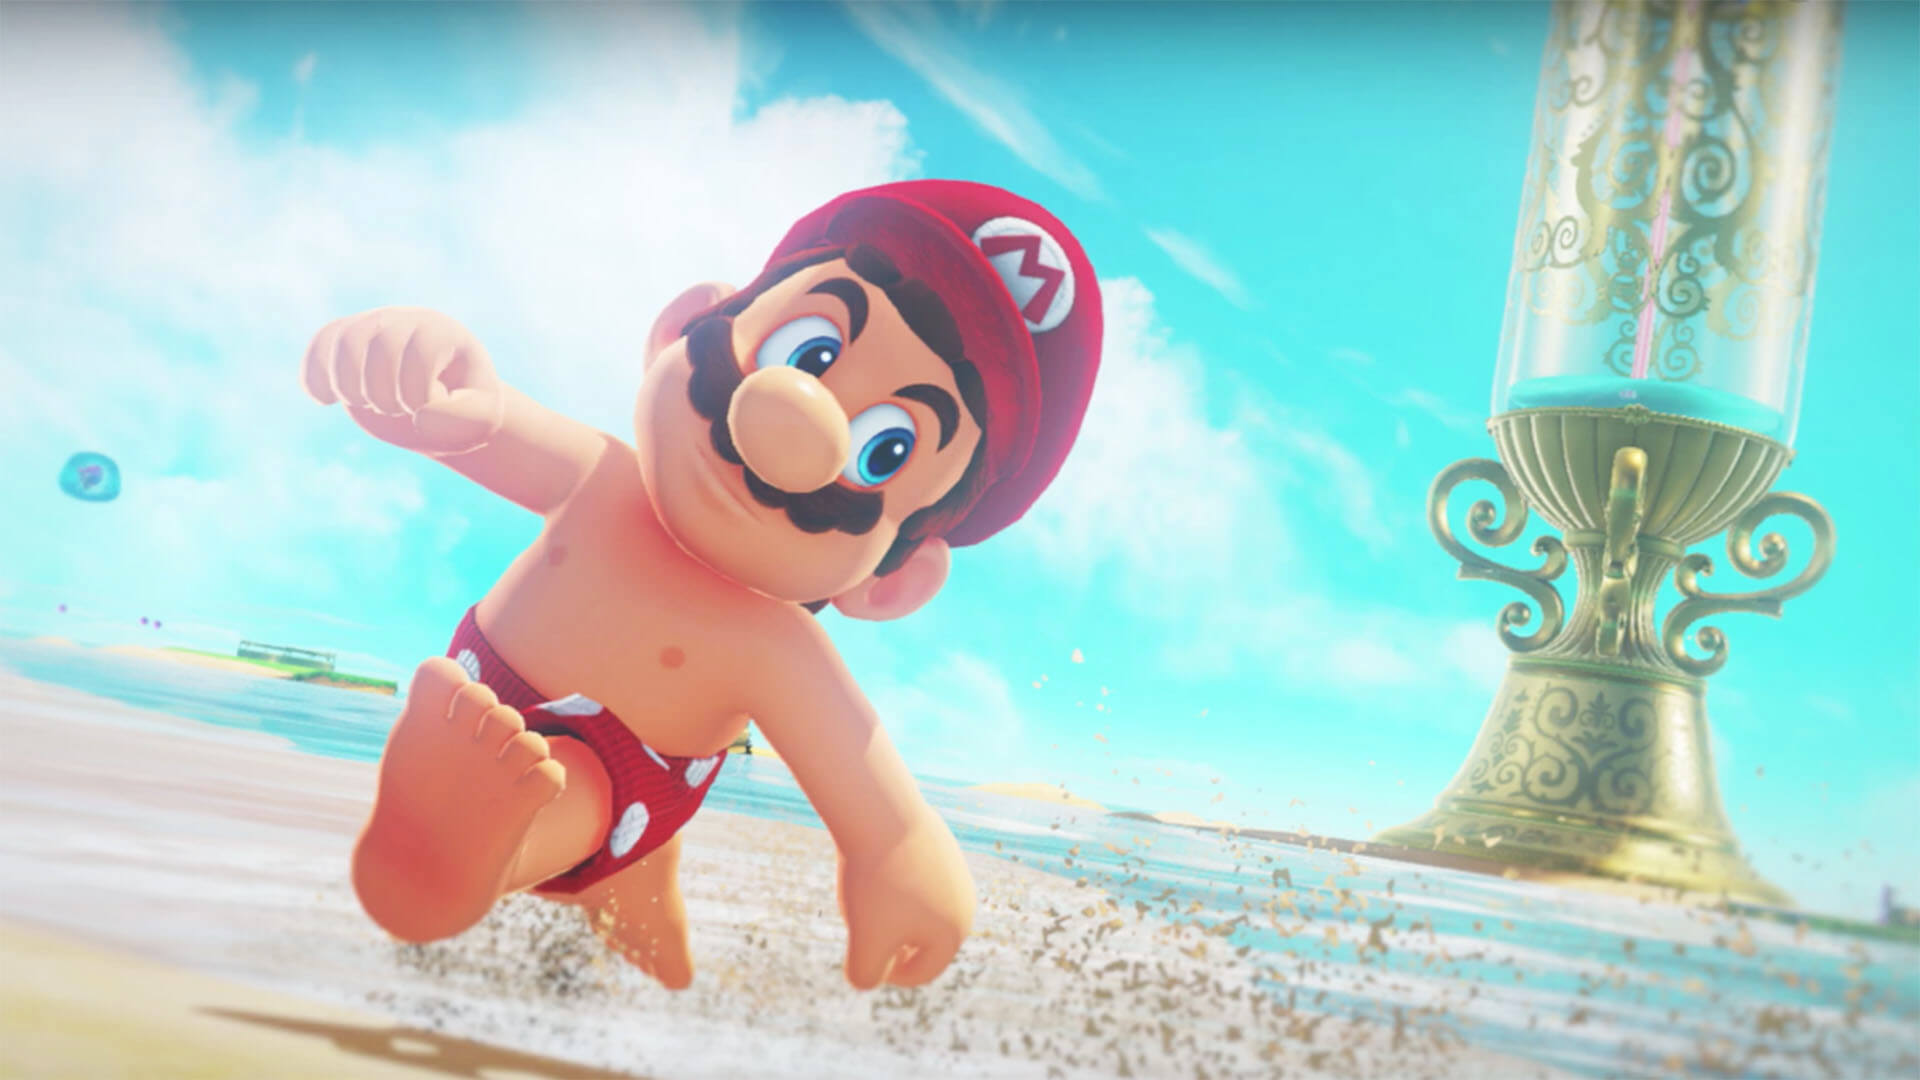 Nintendo Tweet Sparks Speculation on New Mario Game